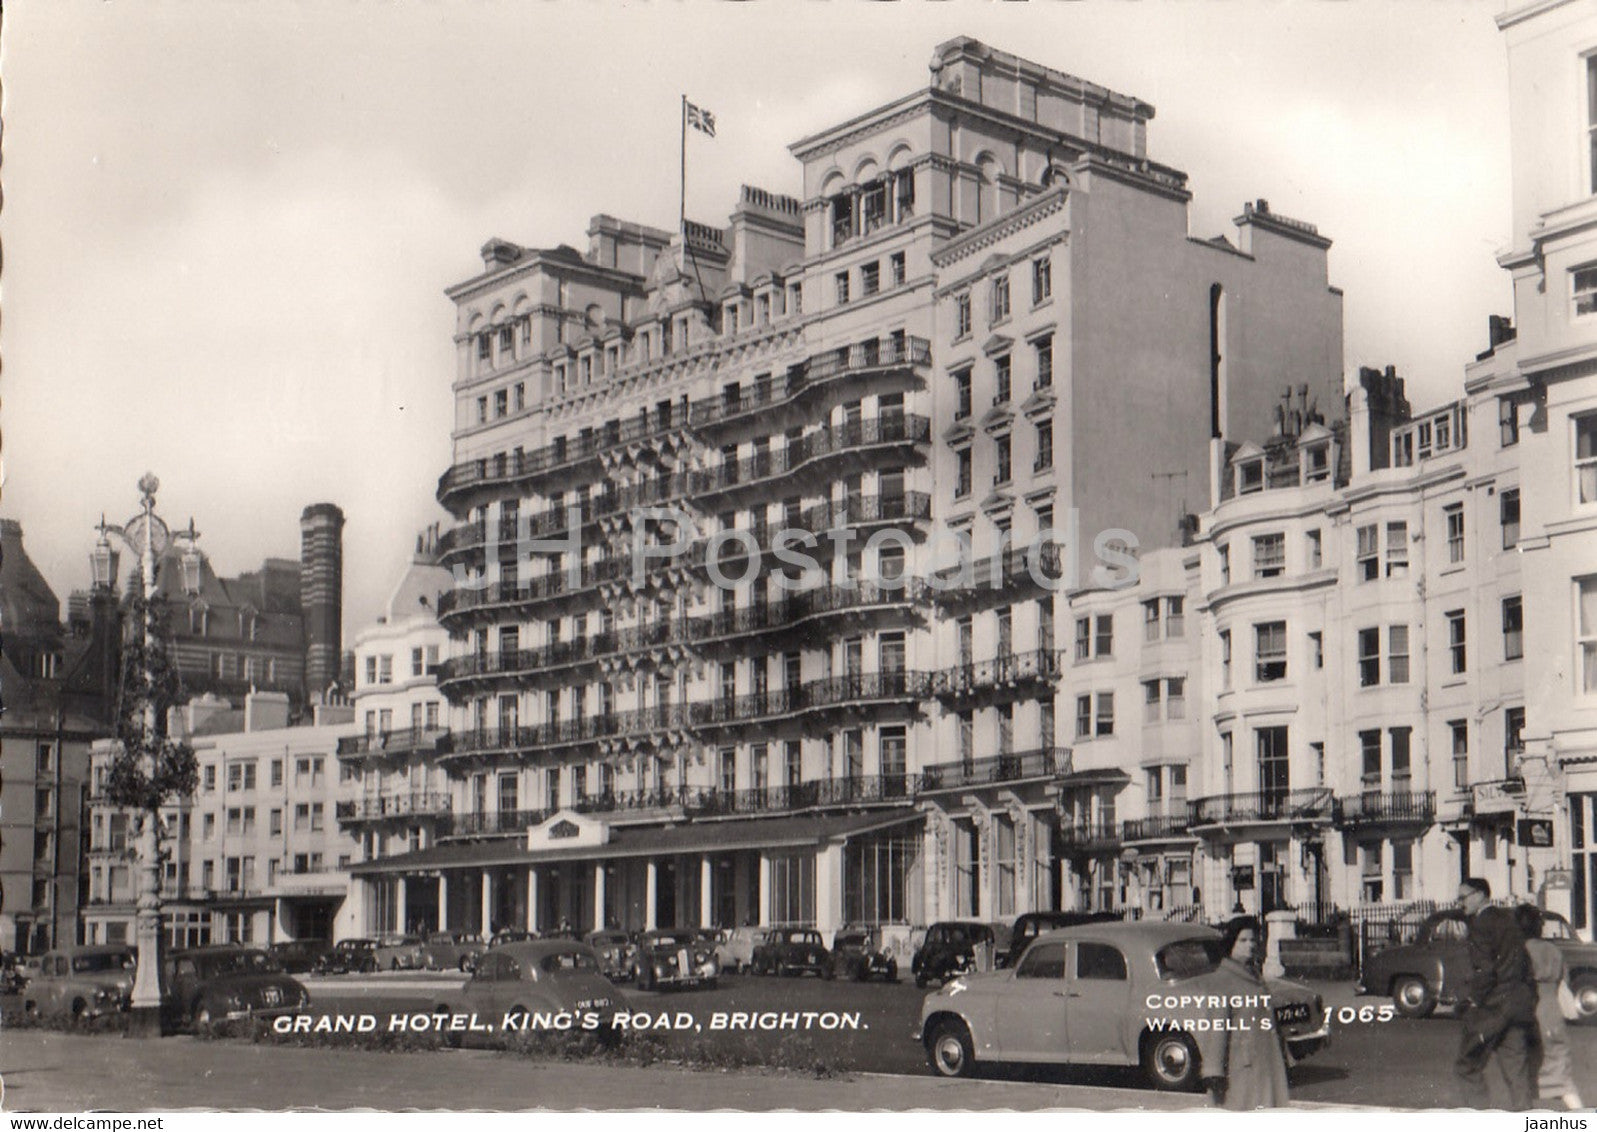 Brighton - Grand Hotel - King's Road - car - 1065 - England - United Kingdom - unused - JH Postcards